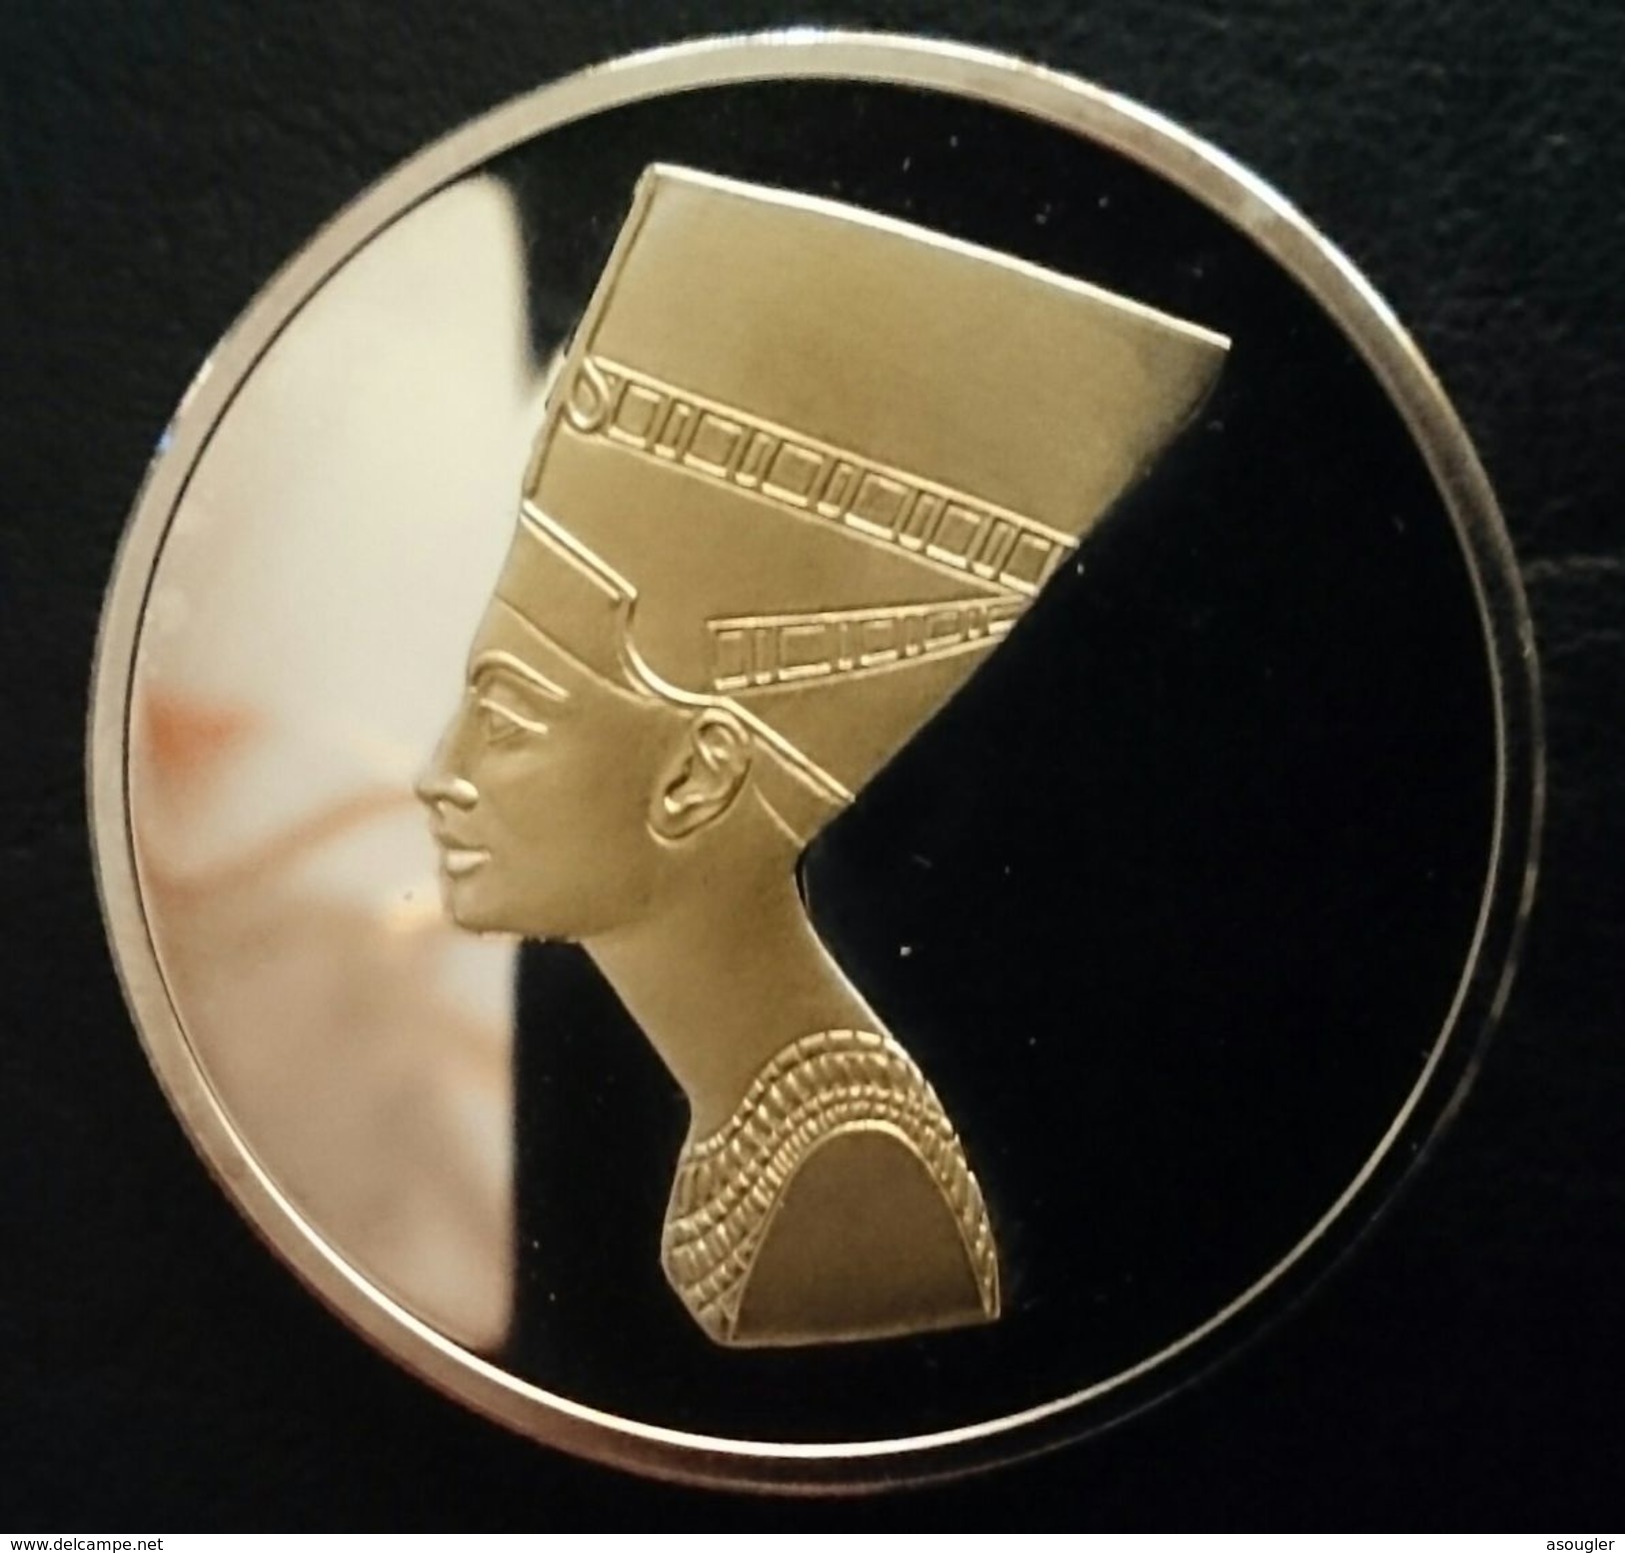 CAMBODIA 3000 Riels 2006 Silver & Gold PROOF "Queen Nefertiti" Free Shipping Via Registered Air Mail - Kambodscha